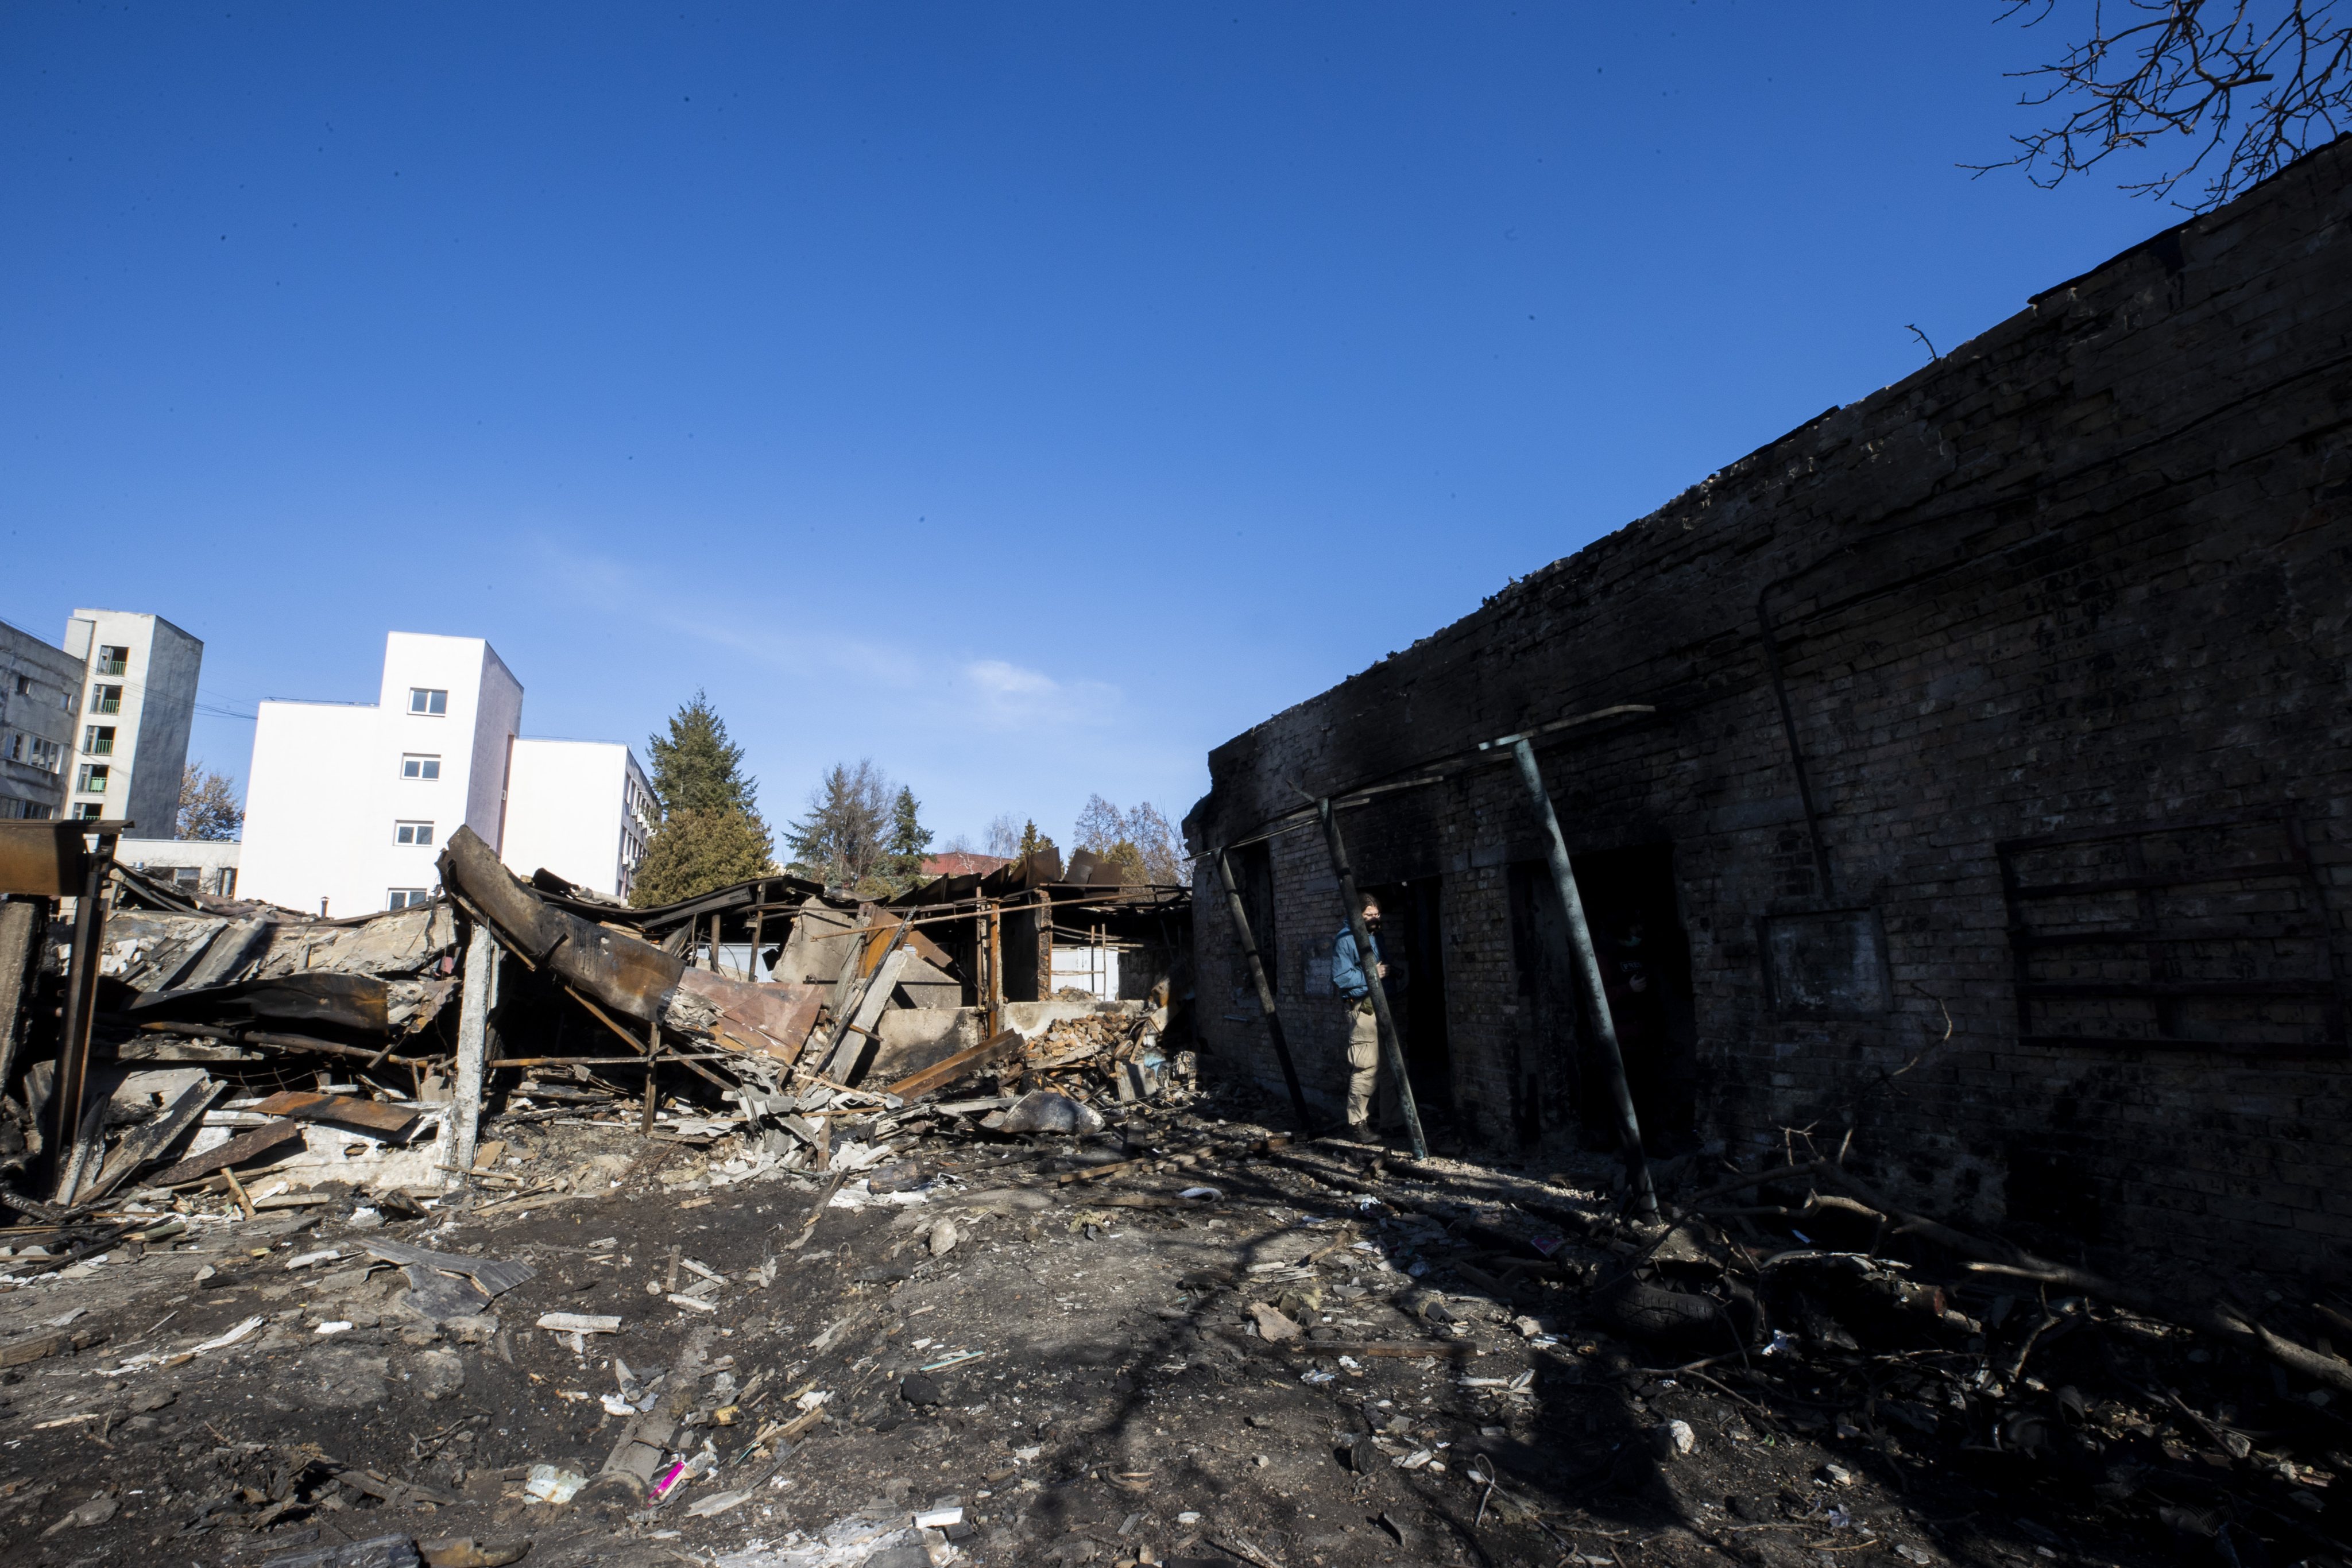 Damage in Kyiv amid Russian attacks